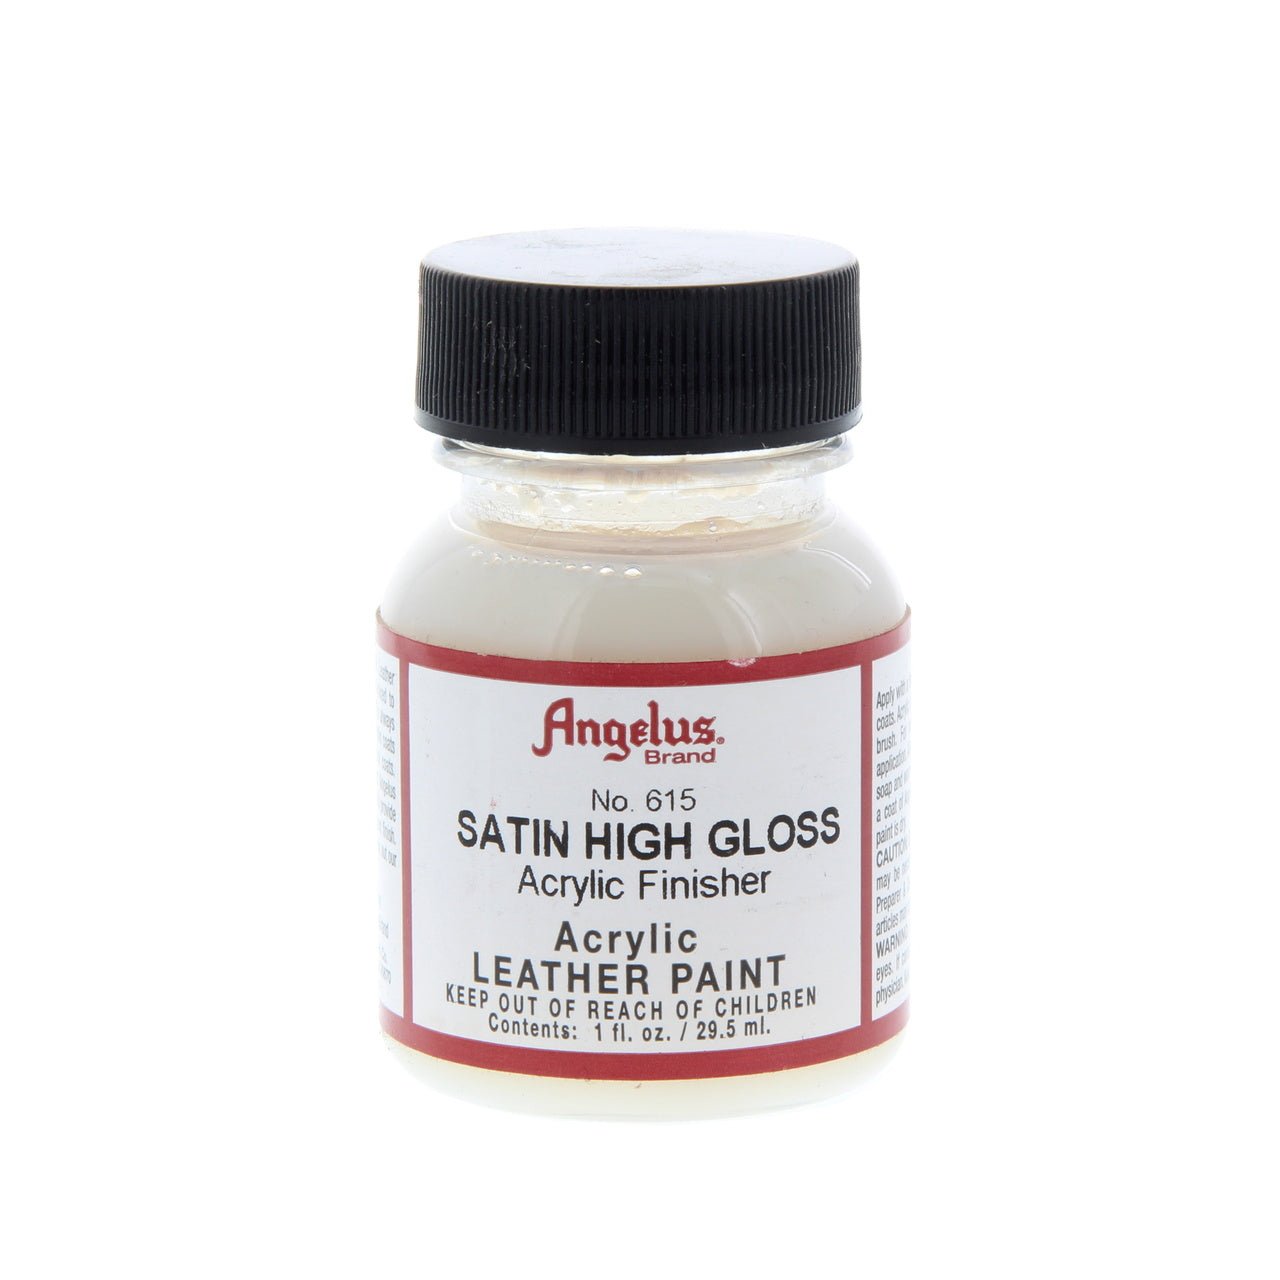 Angelus Acrylic Leather Finisher - 1 oz. Bottle - No. 615 Satin High Gloss - merriartist.com